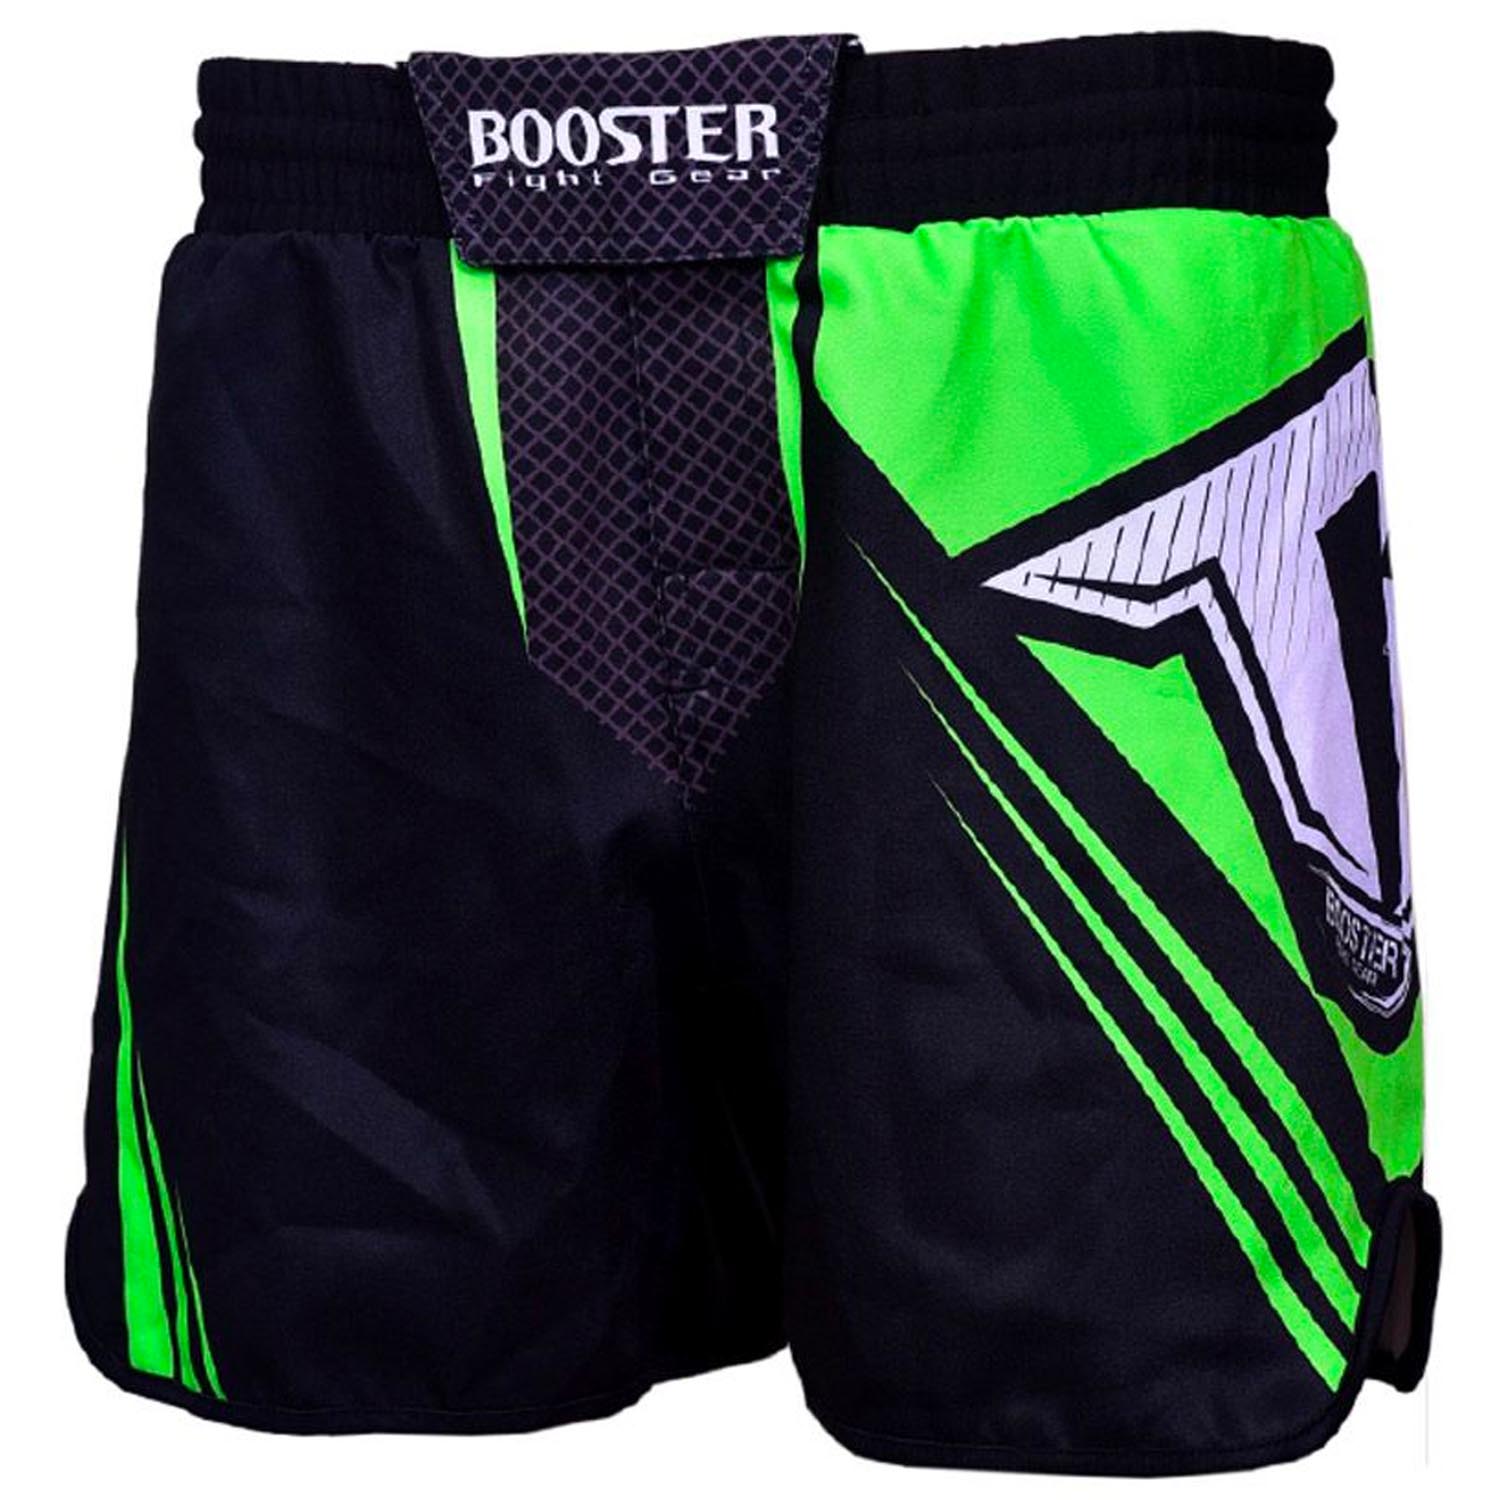 Booster MMA Fight Shorts, Xplosion 3, black-green, M